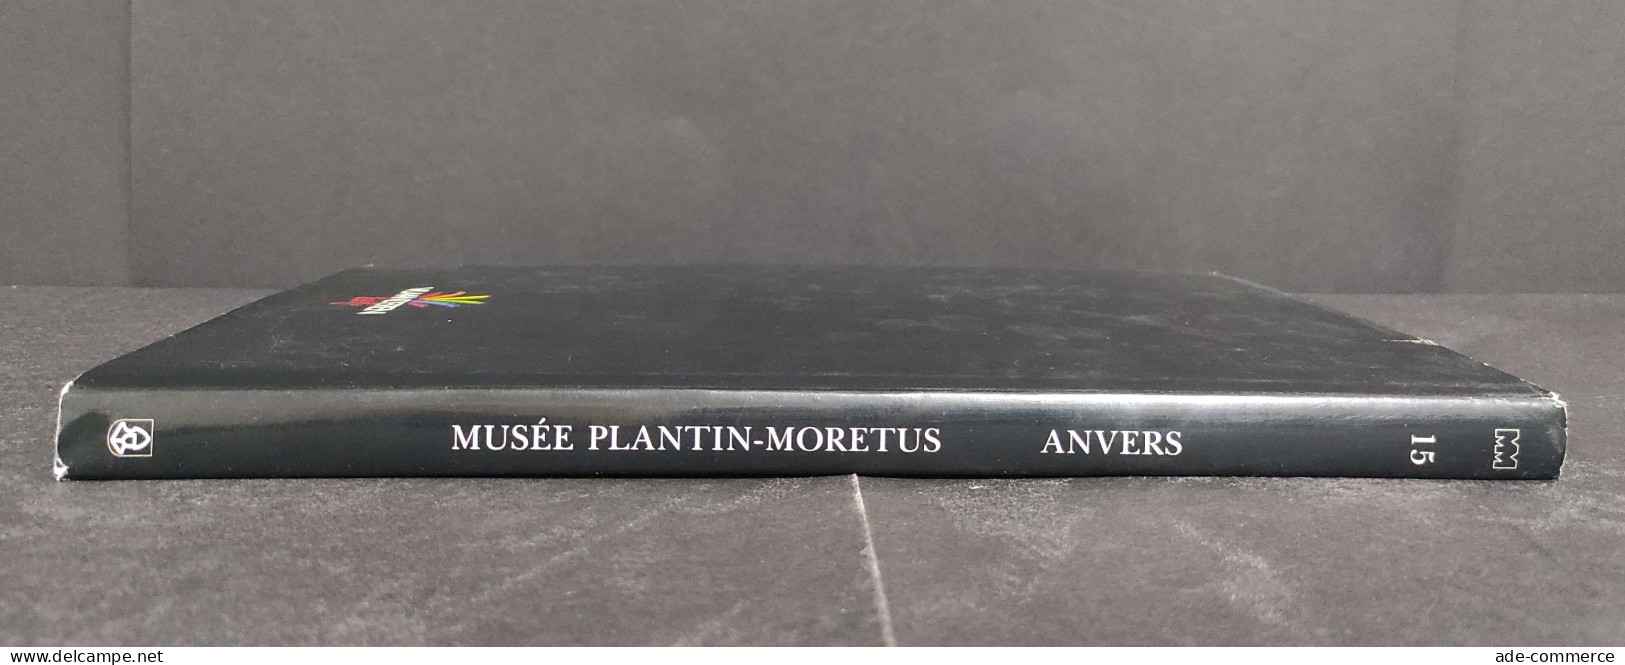 Musee Platin-Moretus - Anvers - F. Nave - L. Voet - 1989 - Arts, Antiquity